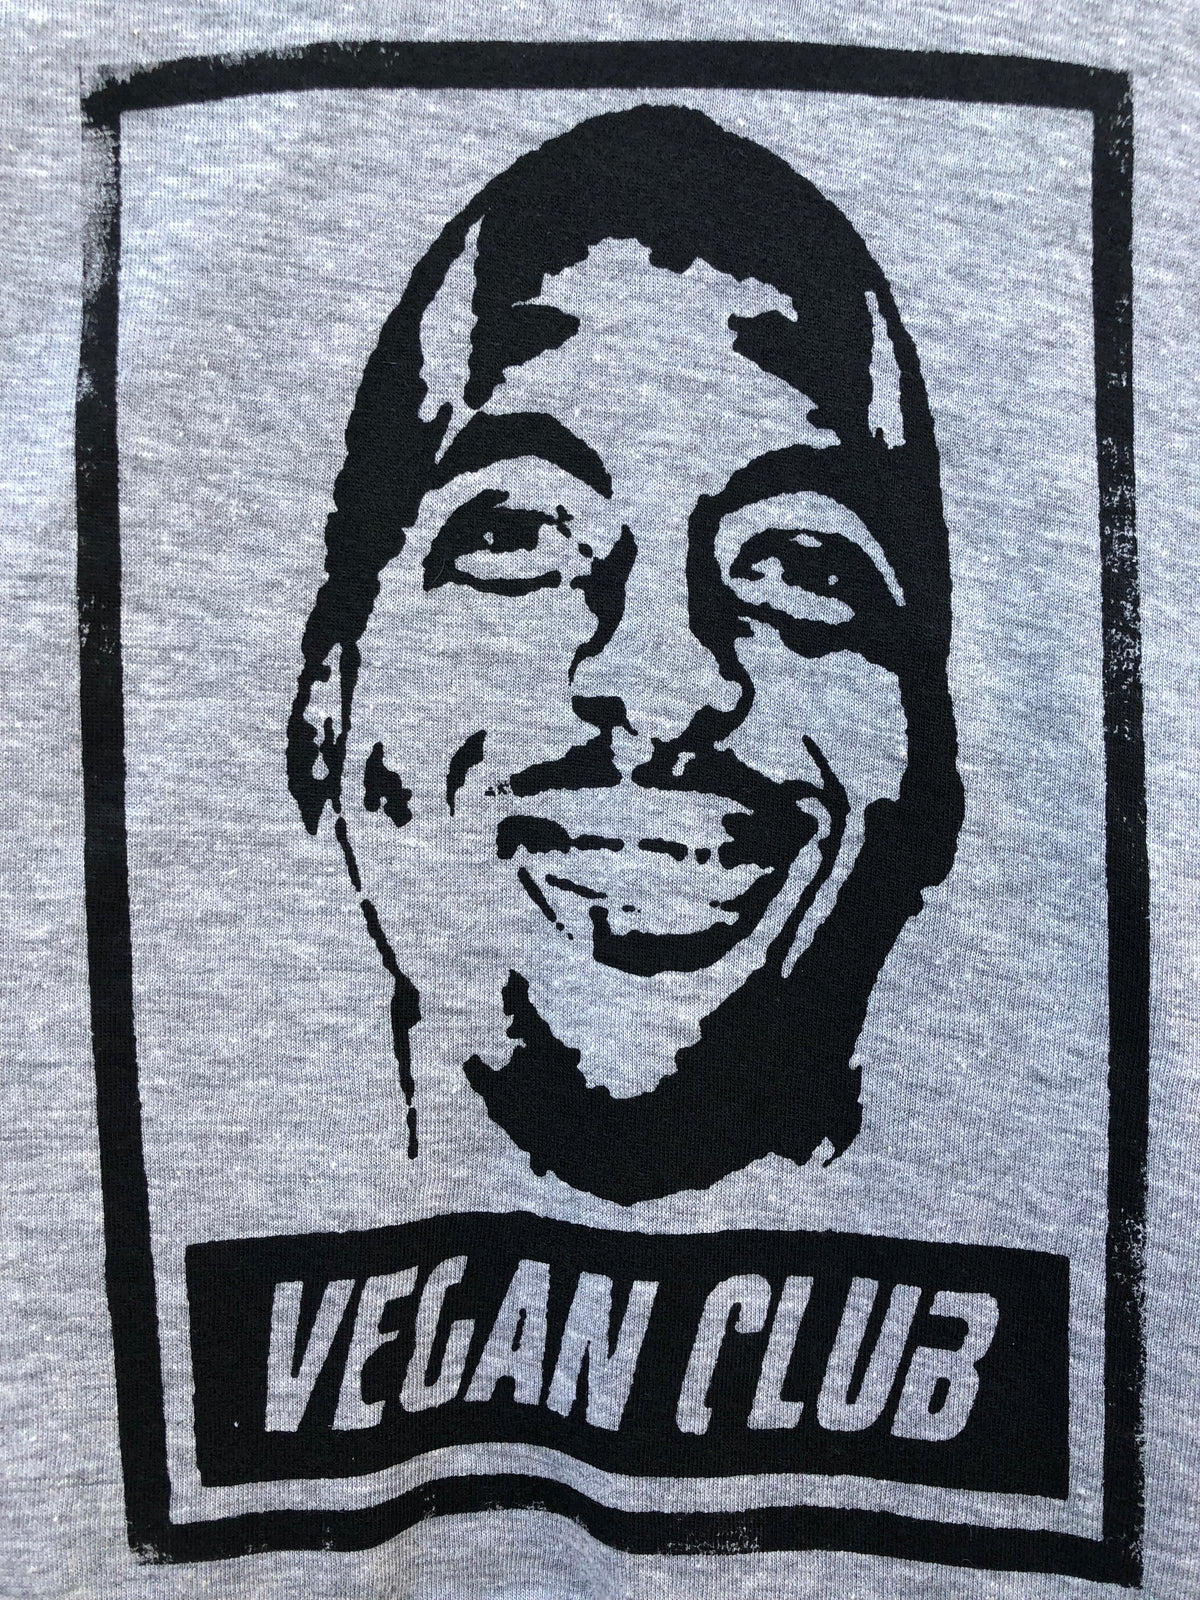 Organic Made in USA T-shirt "Vegan Club" featuring John Salley